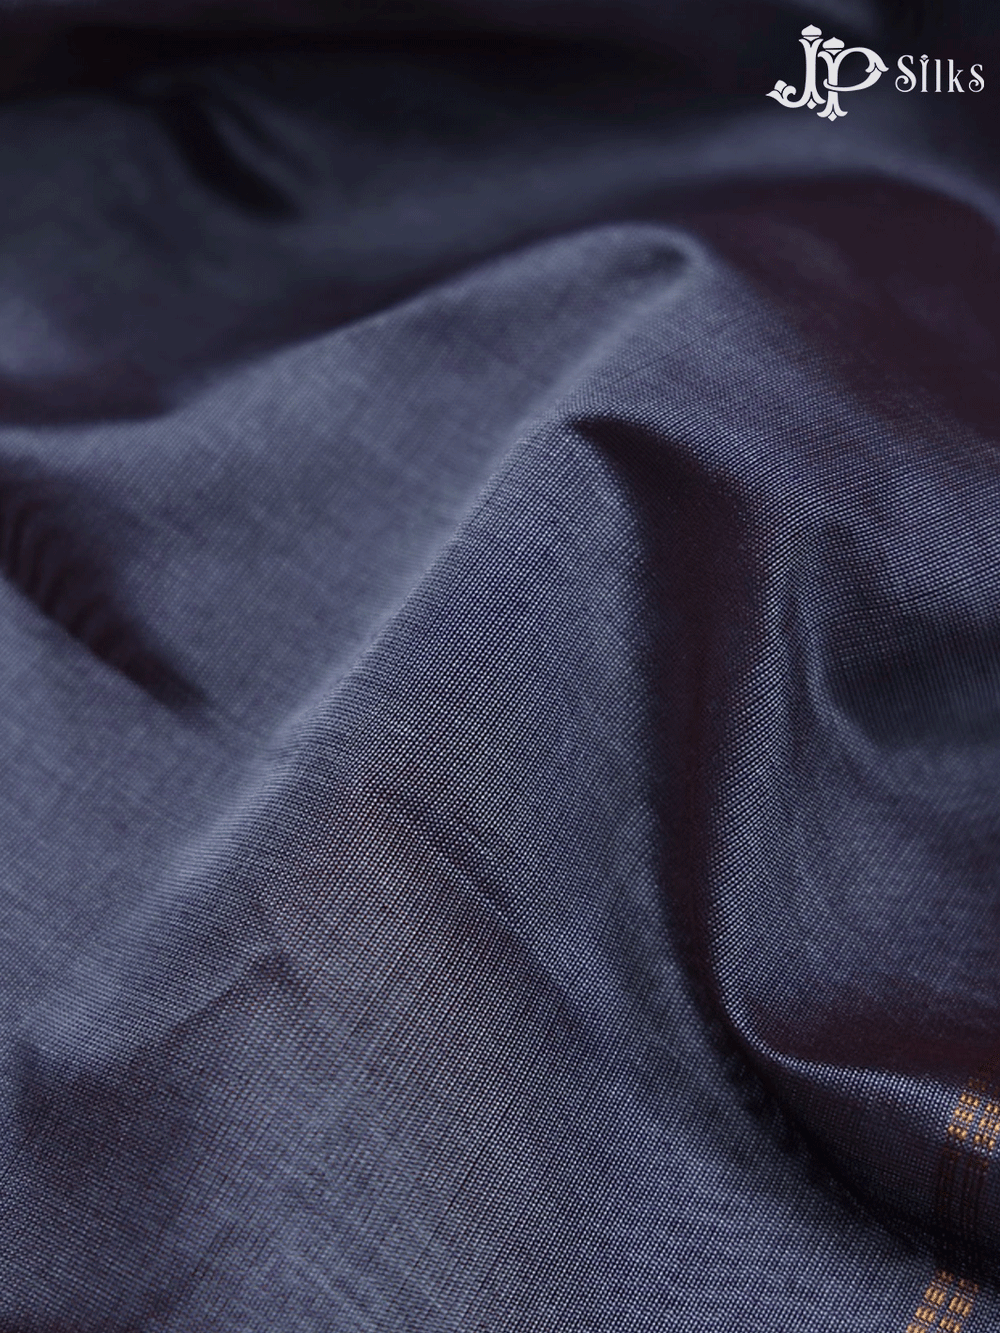 Plain Grey Silk Cotton Saree - F317 - View 1